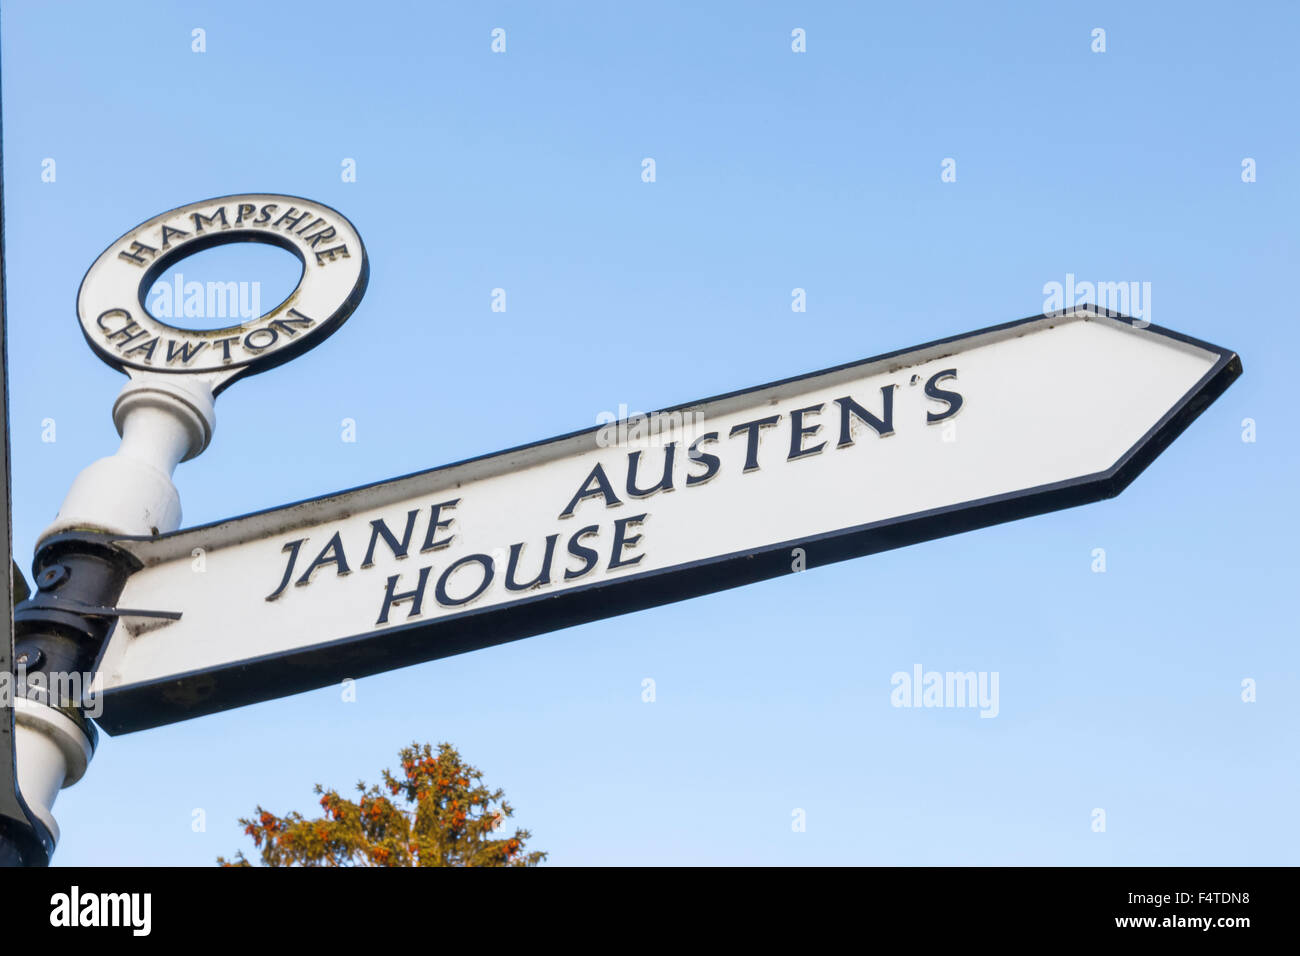 Straße, Chawton, Hampshire, England abonnieren Austens Haus Stockfoto